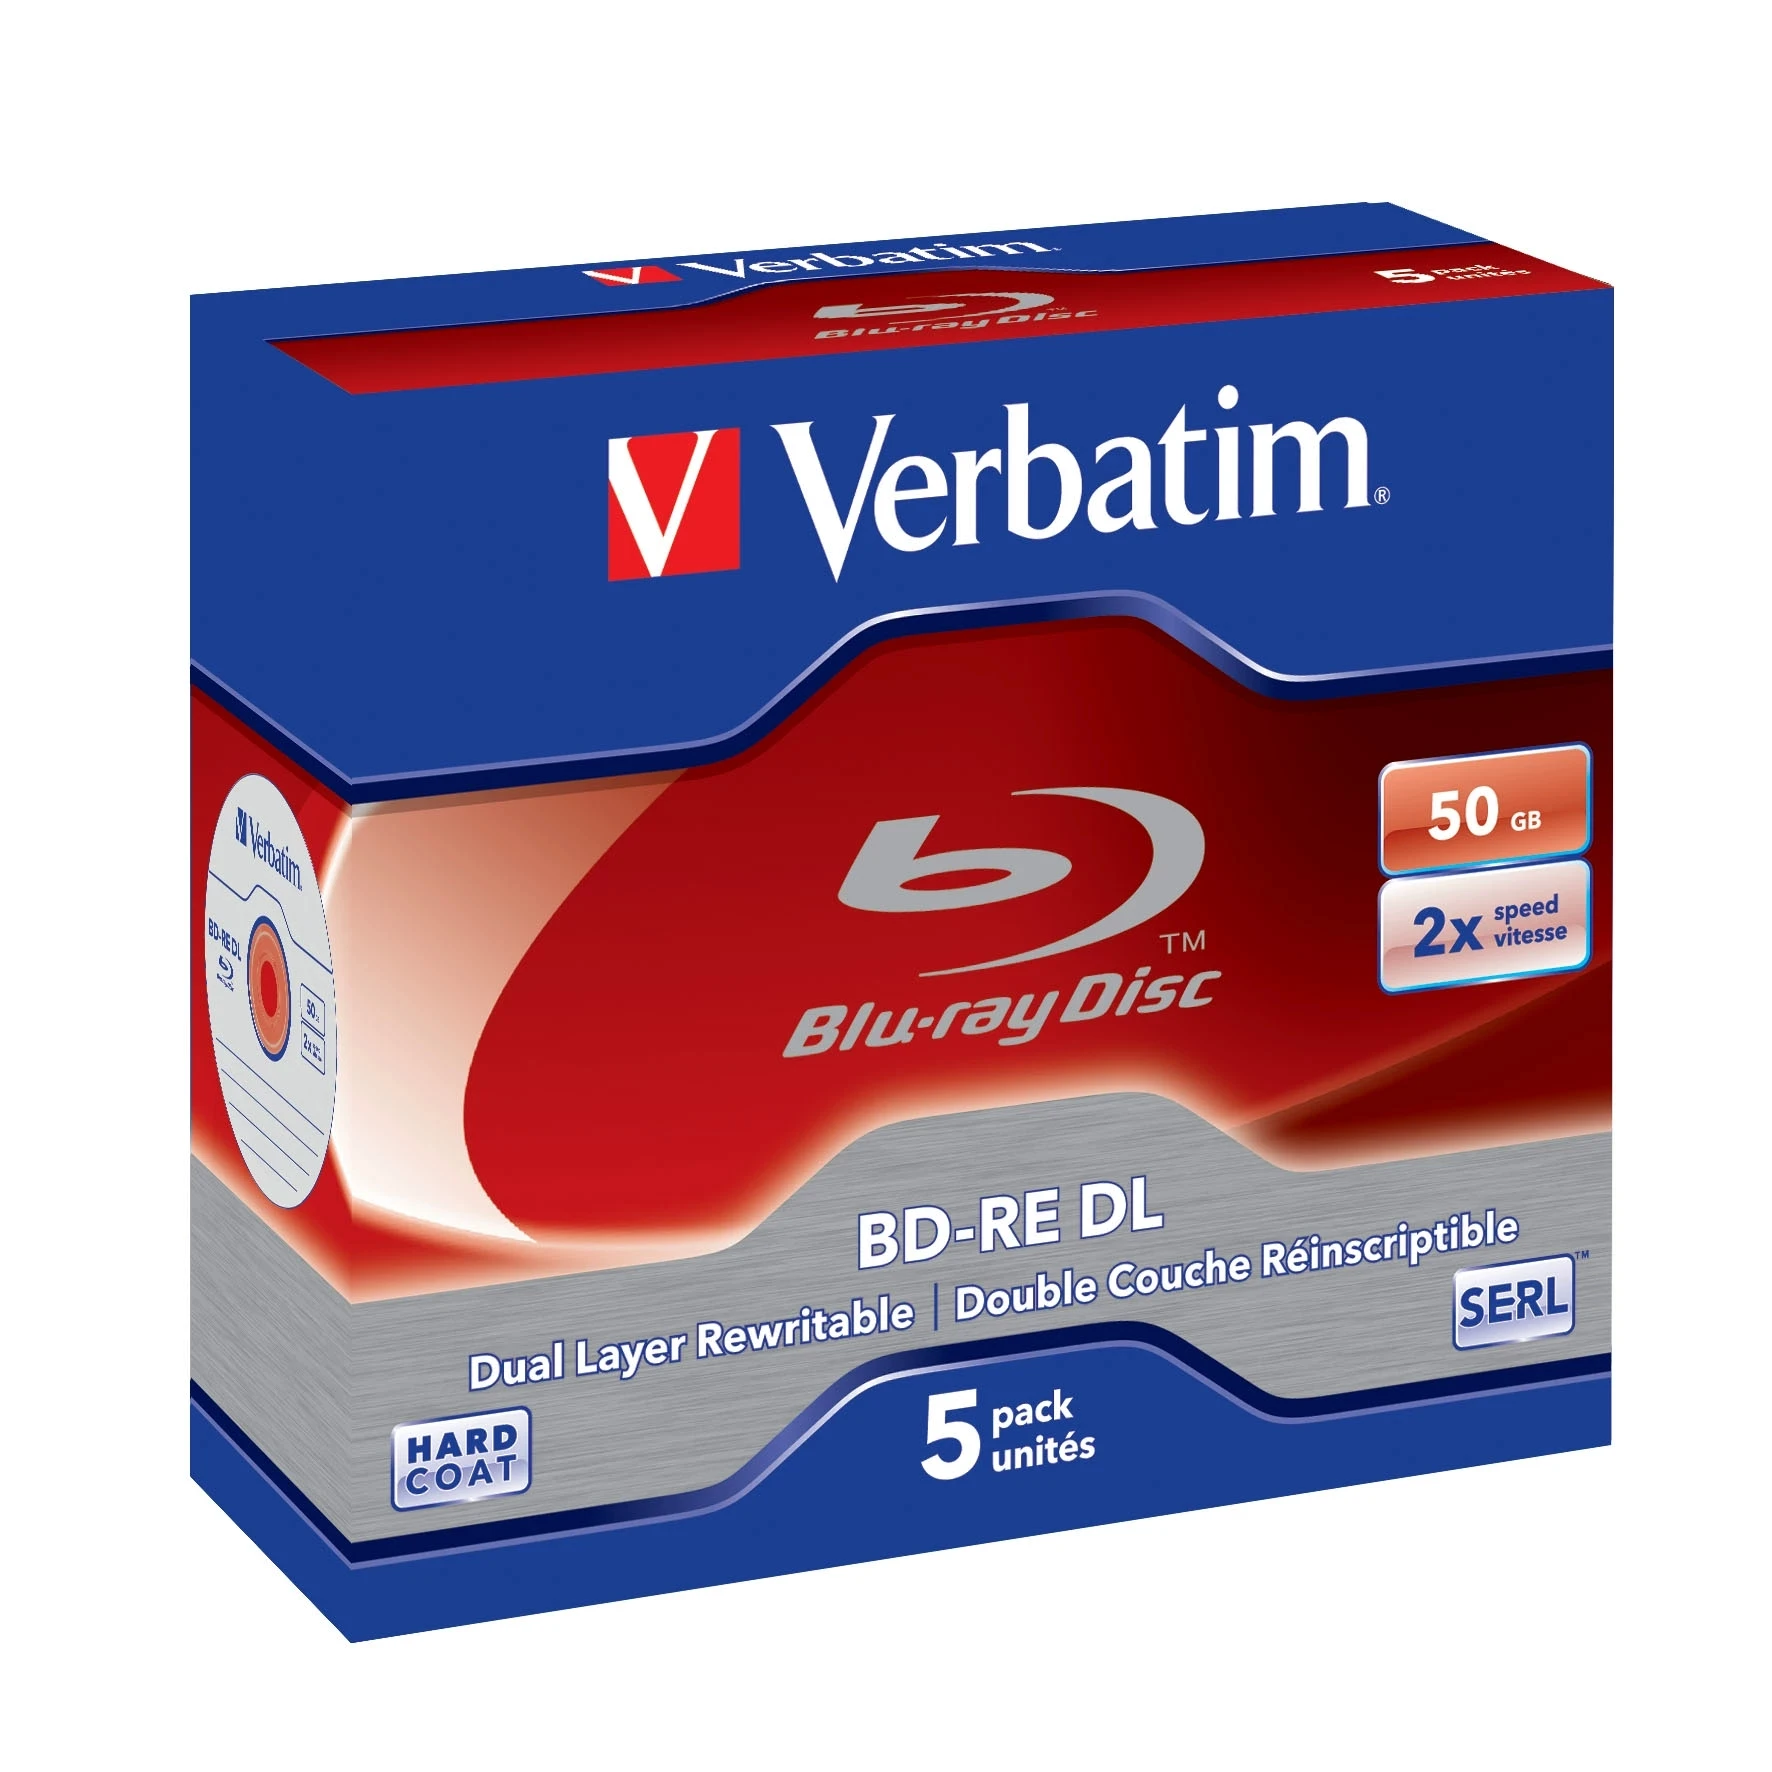 5Pcs Verbatim Blu-Ray Disc BD-RE DL 50GB 2X BDRE Blank Bluray Disks Dual Layer Rewritable